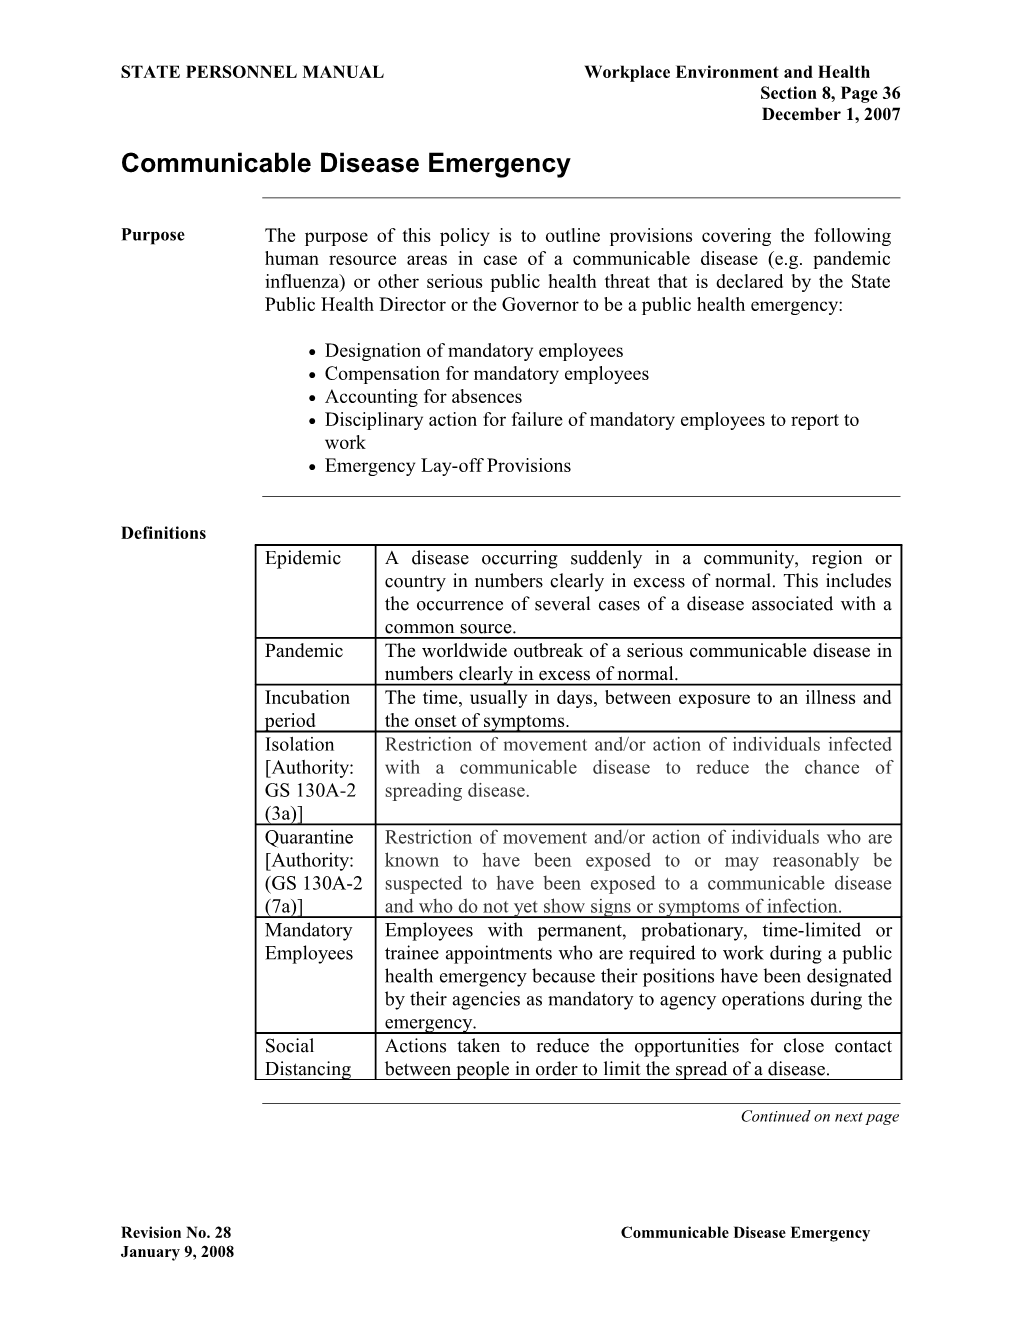 Communicable Disease Emergency